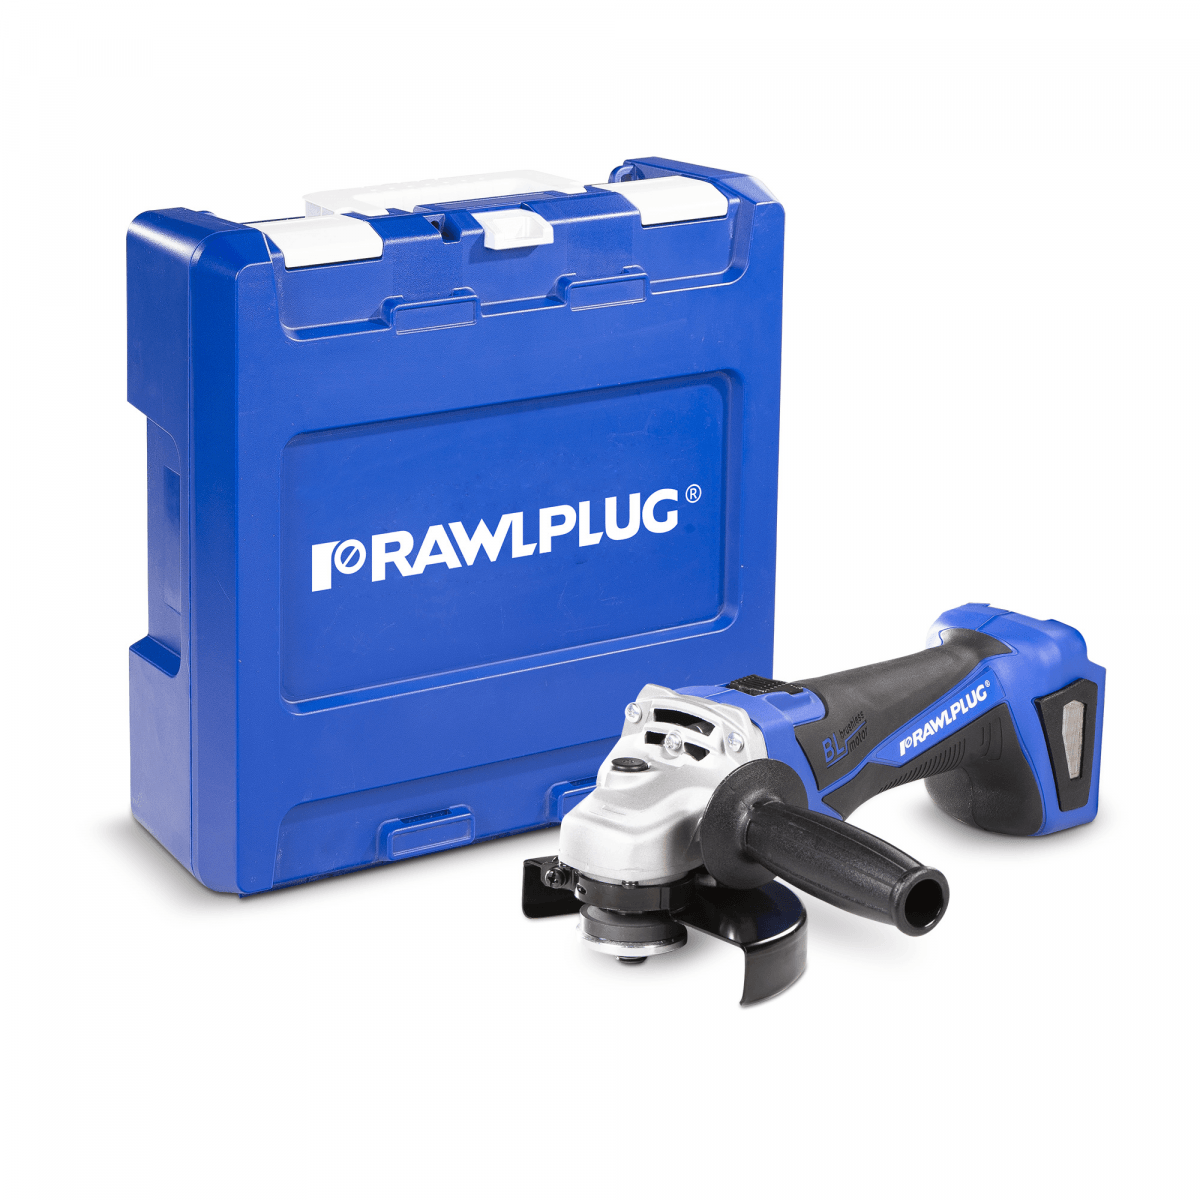 Rawlplug R-PAG18-S Cordless RawlGrinder 18V 125mm Bare Tool & Transport Case